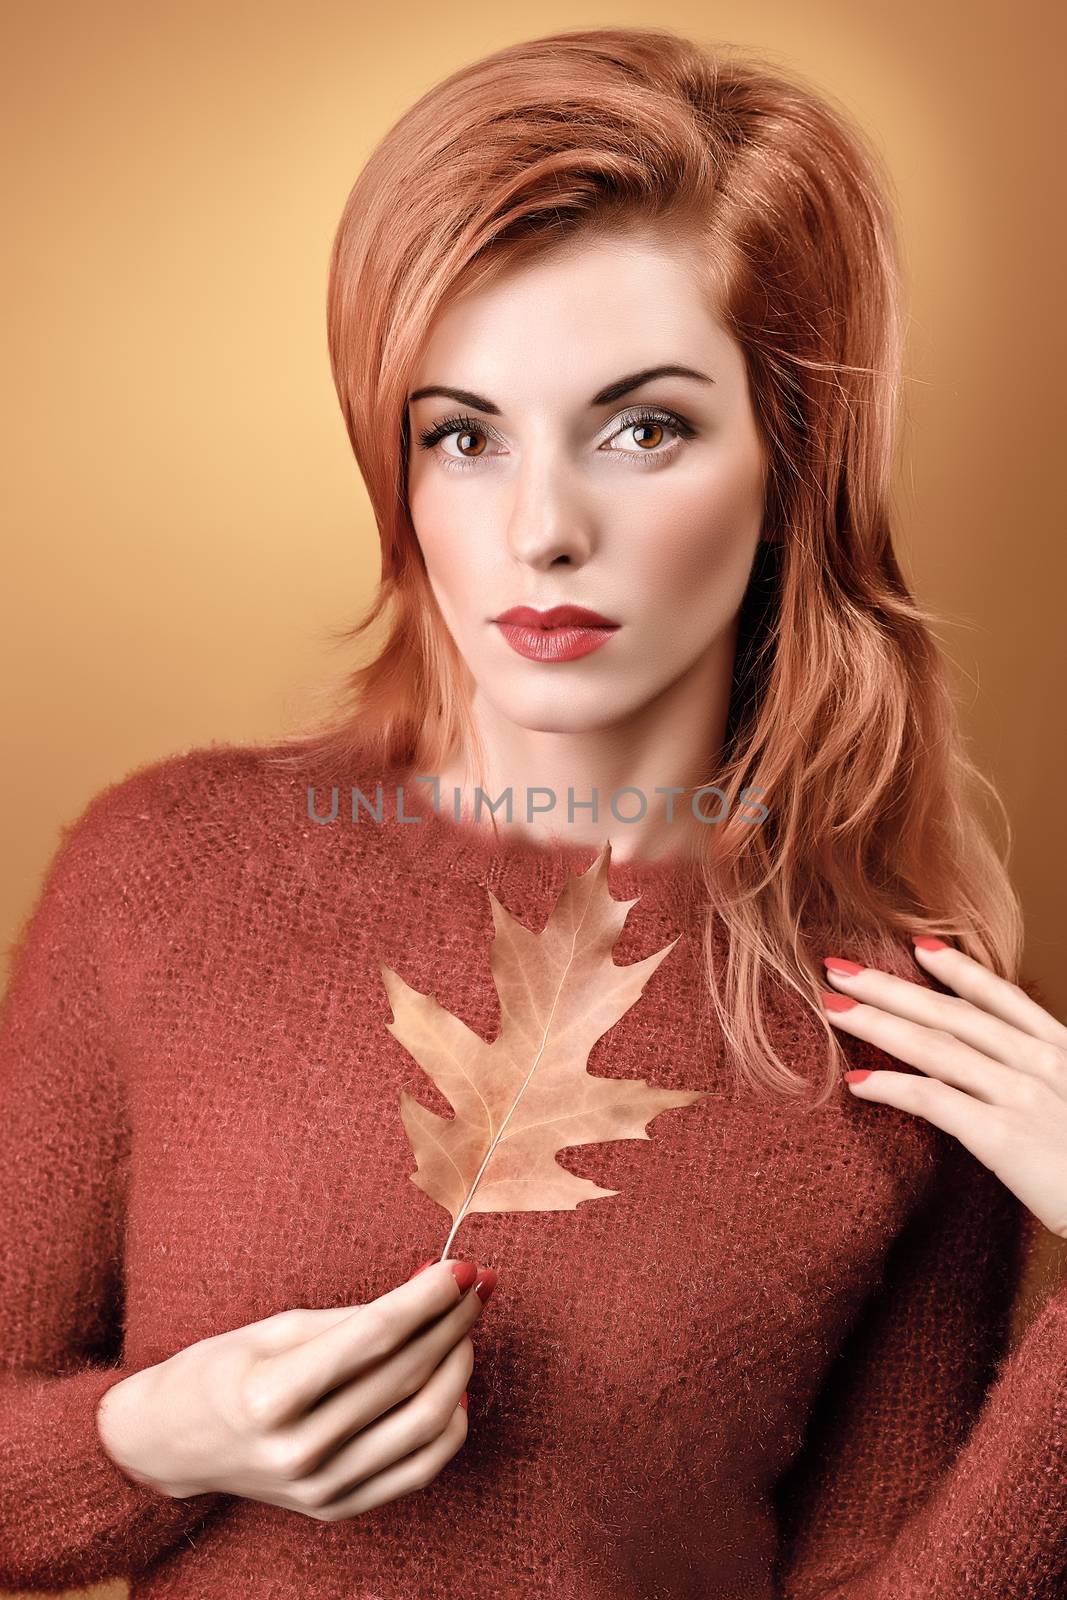 Beauty portrait redhead woman autumn leafs,vintage by 918